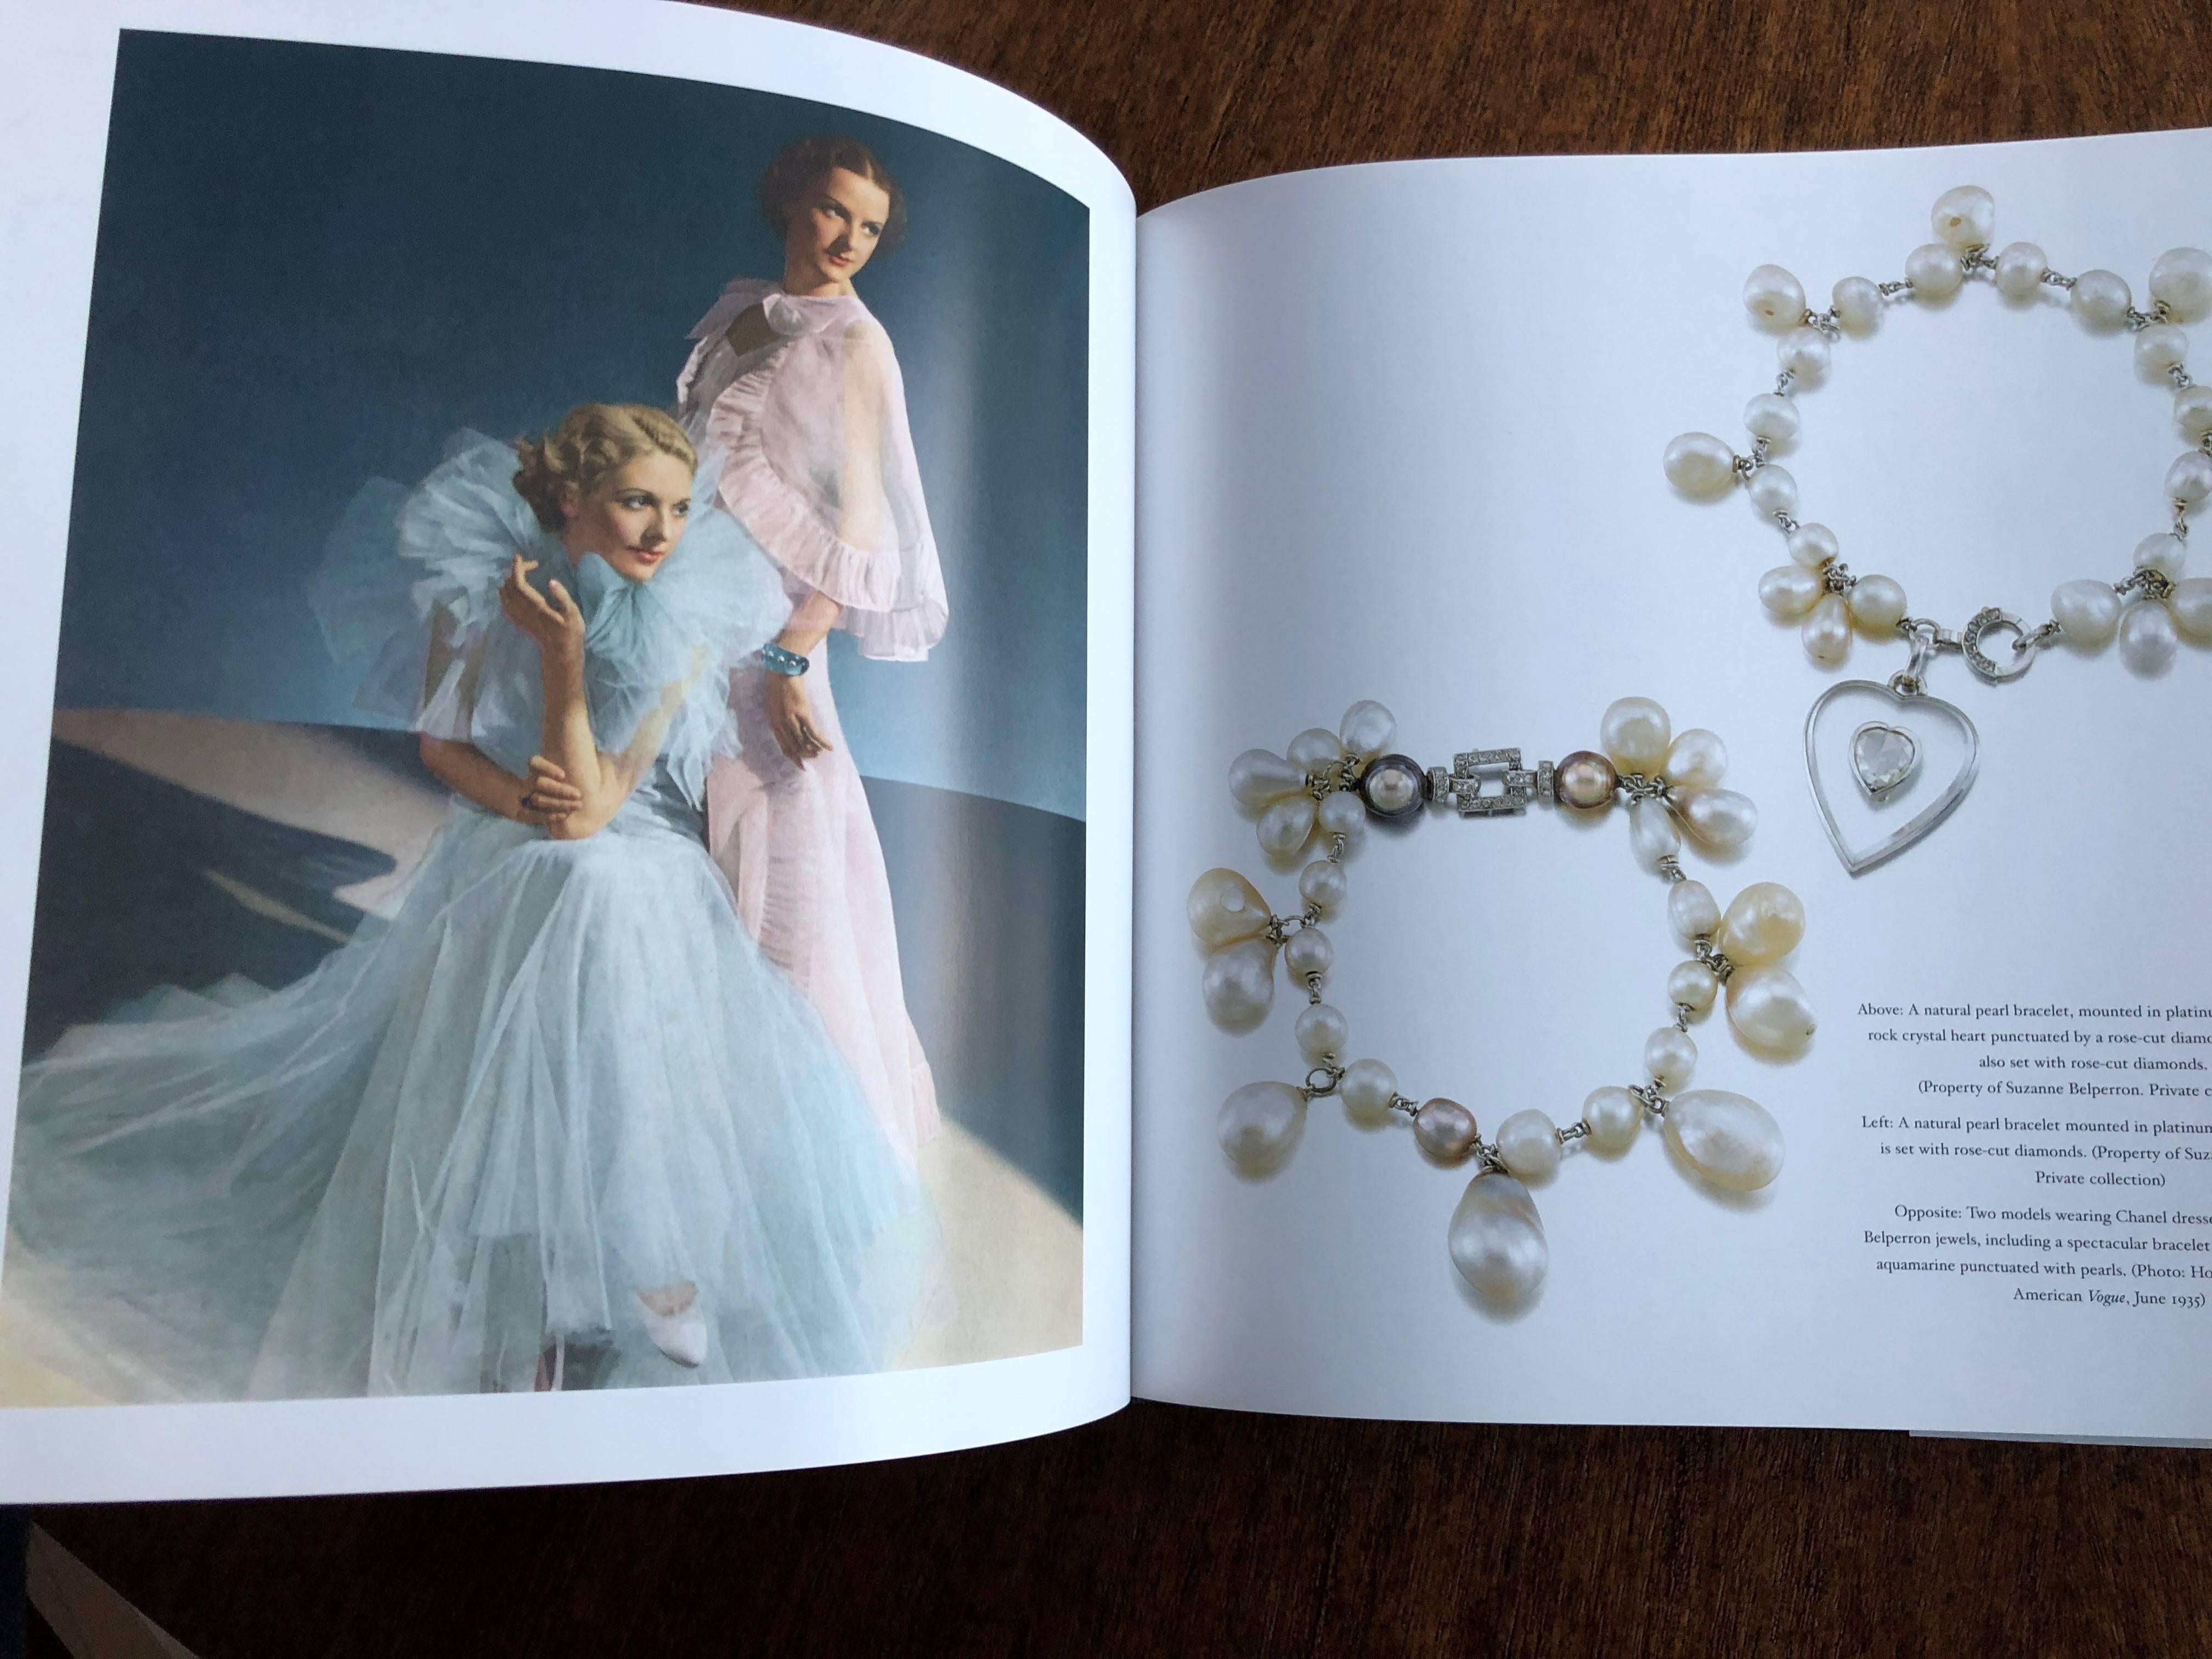 Suzanne Belperron Rare Jewelry Book Sealed Unopened New 2